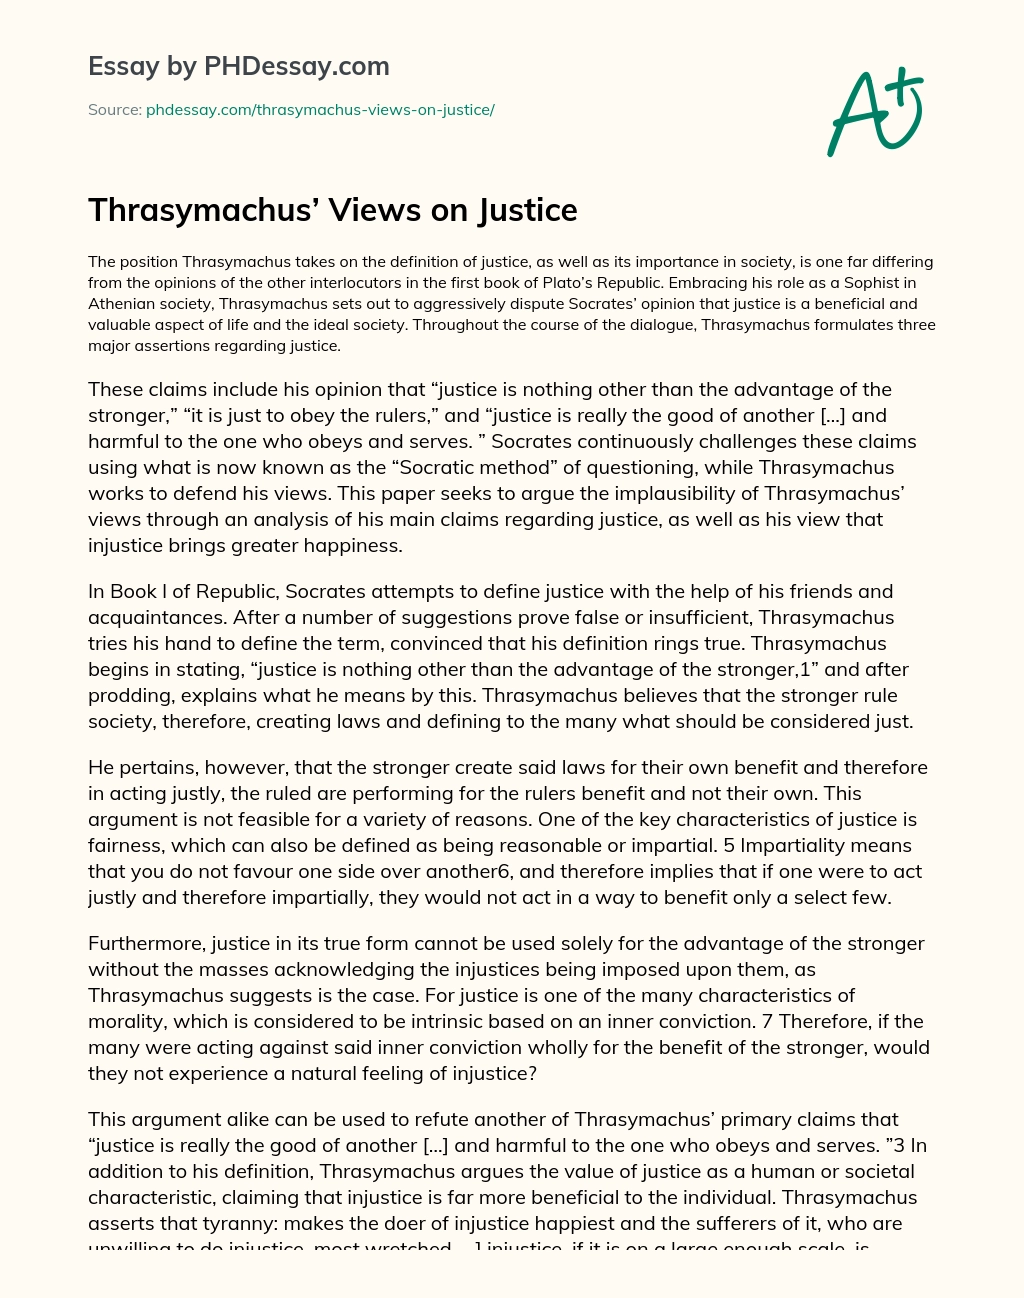 Thrasymachus’ Views on Justice essay